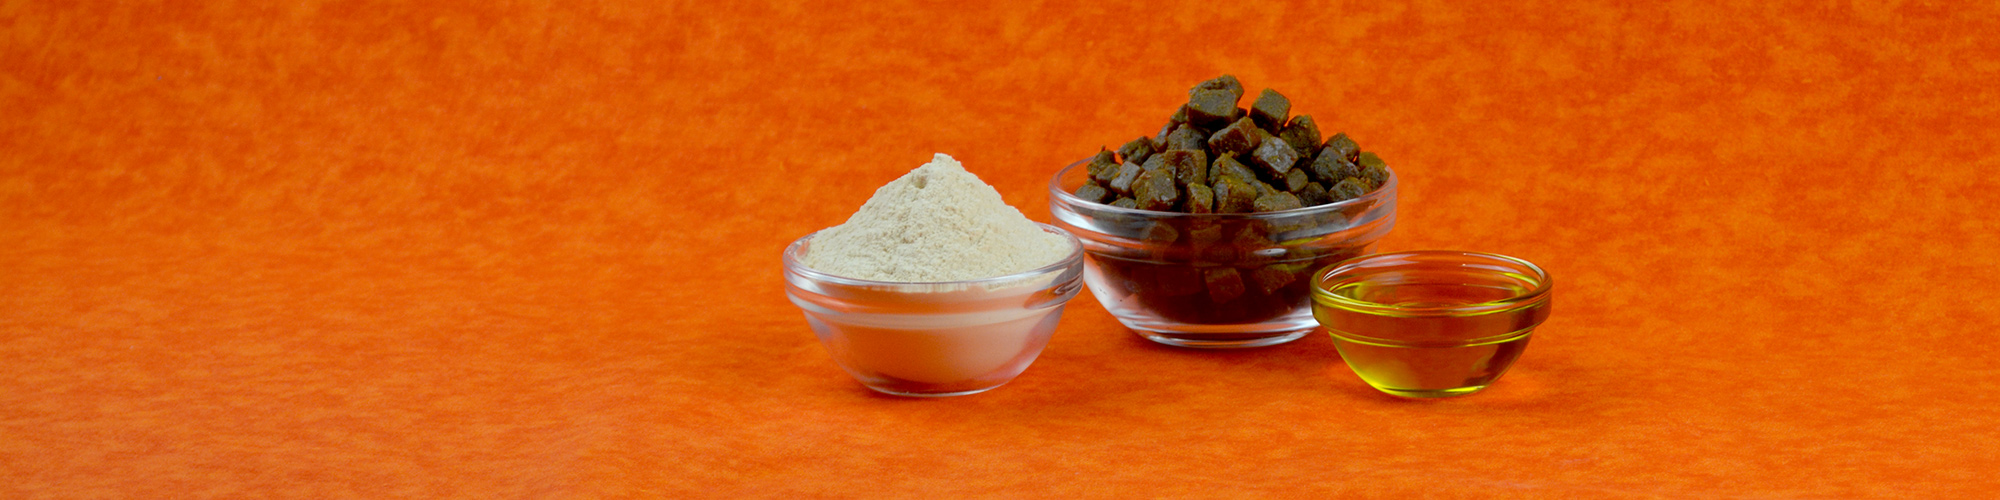 Organic Baobab Powder, Fruit Snacks and Oil